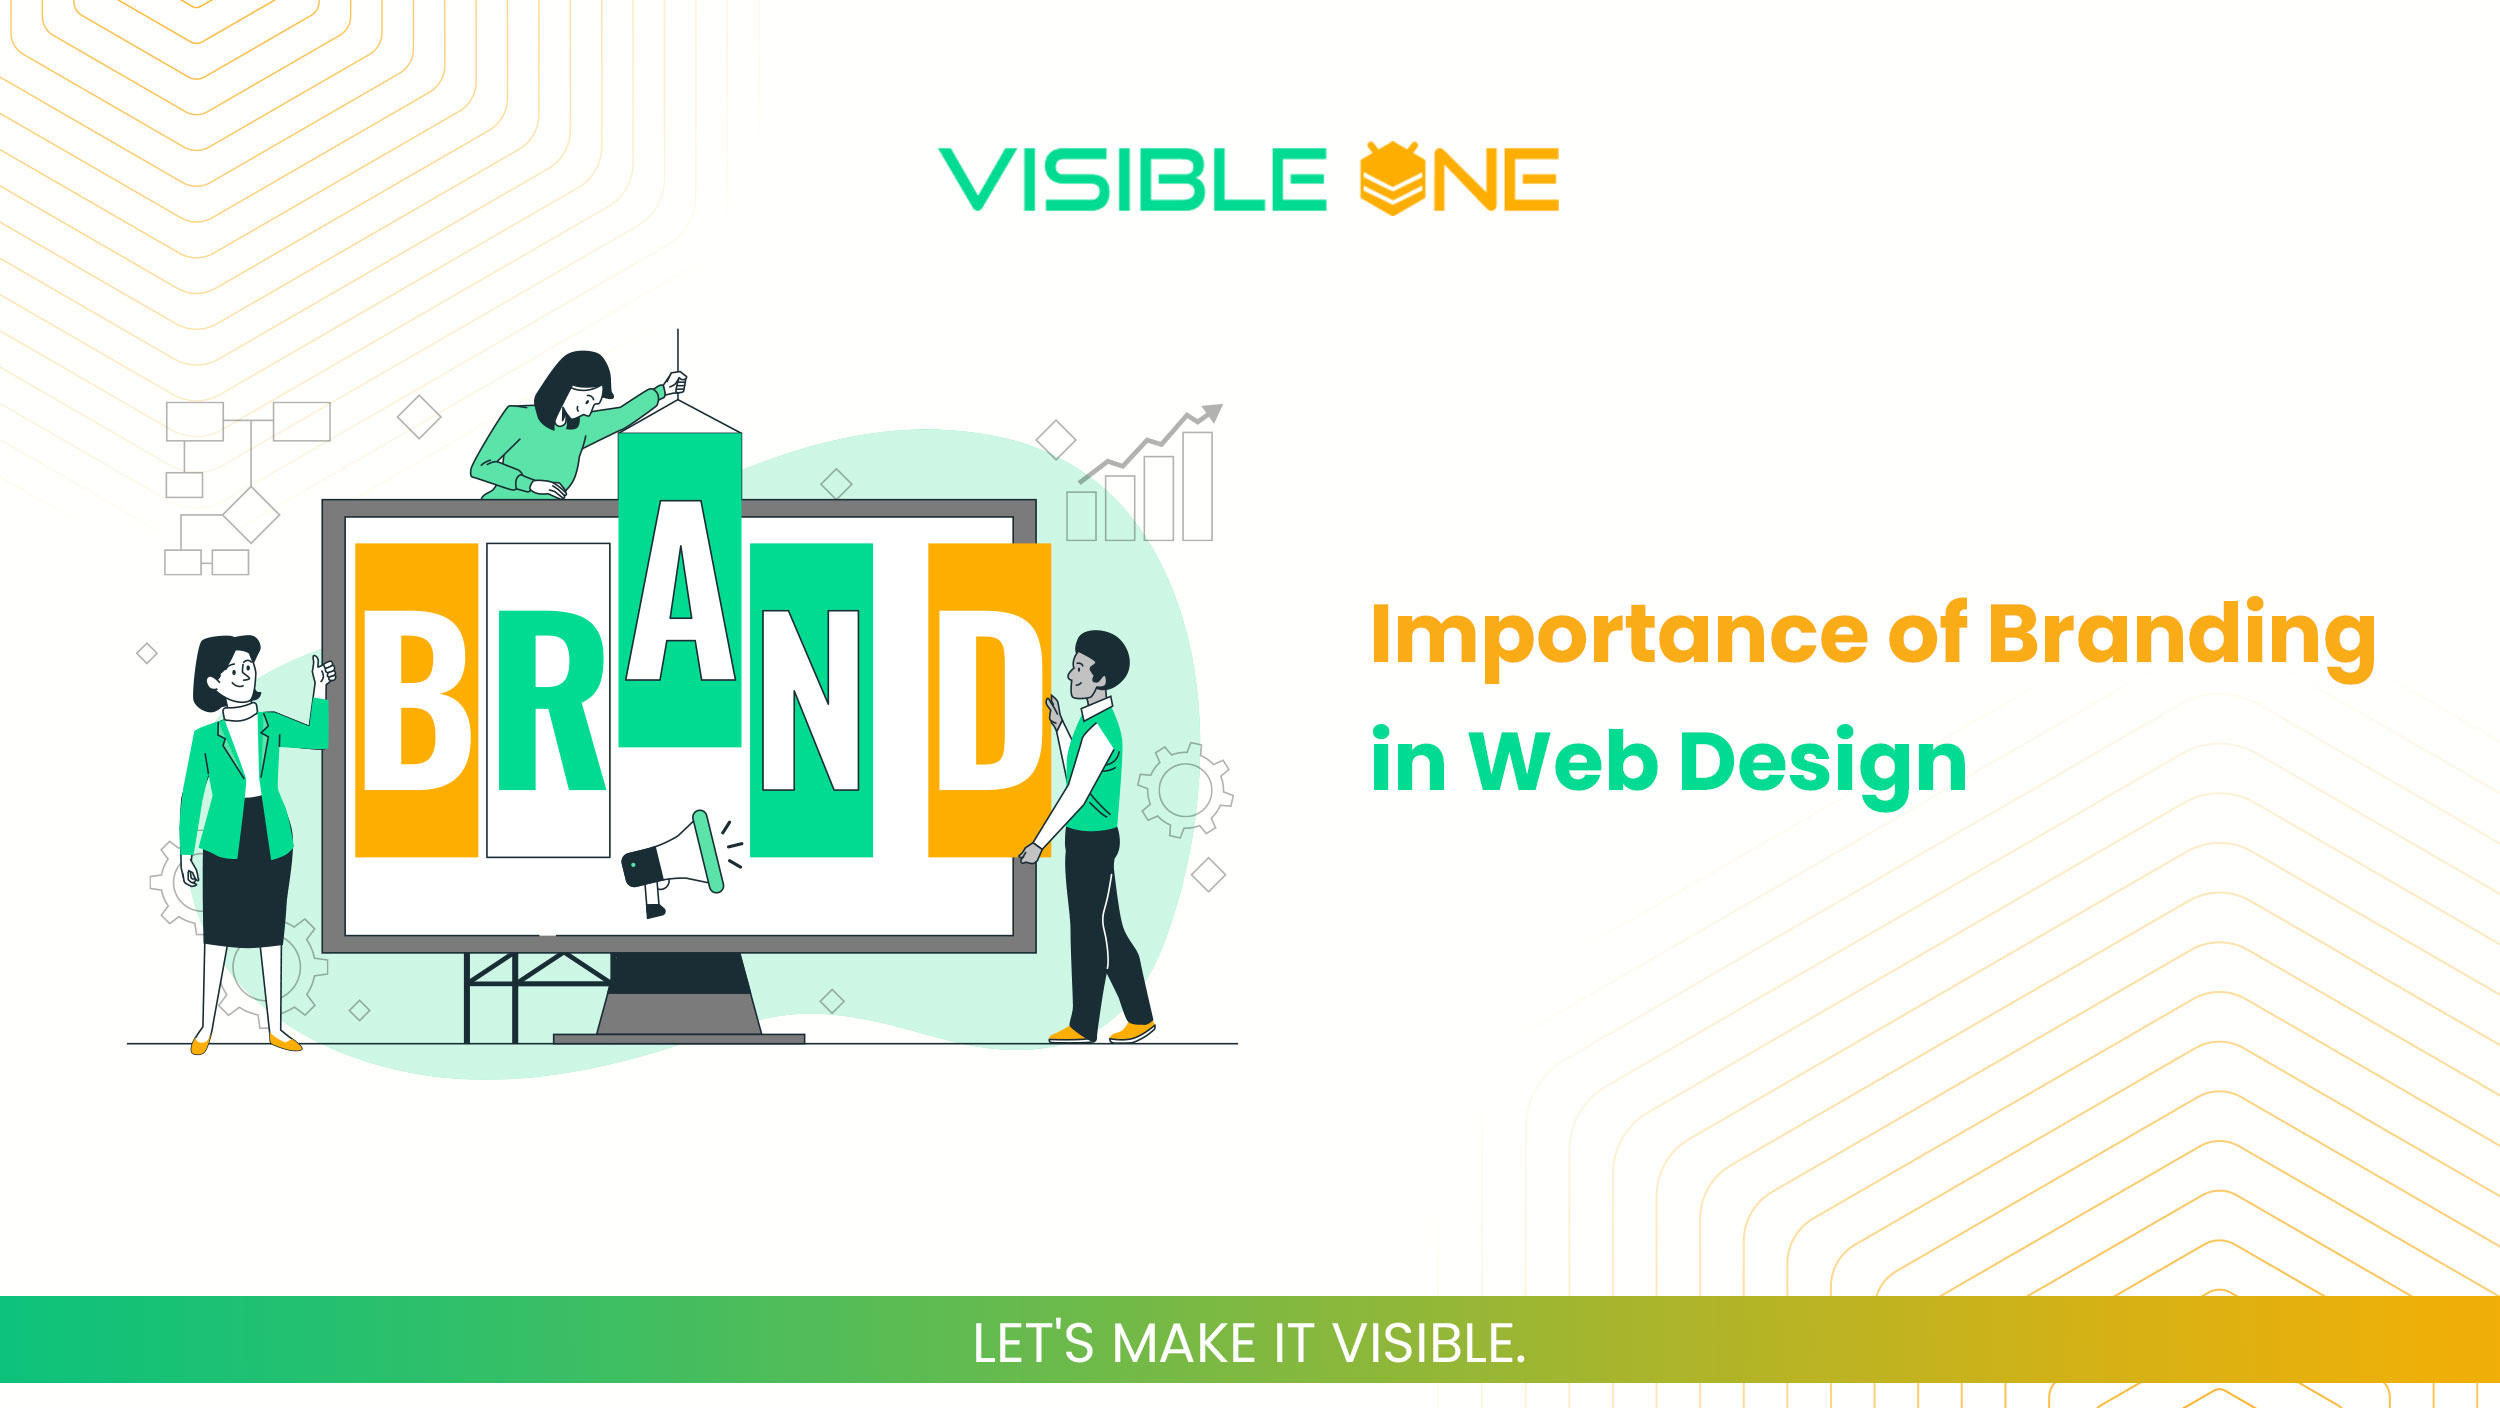 Importance of Branding in Web Design